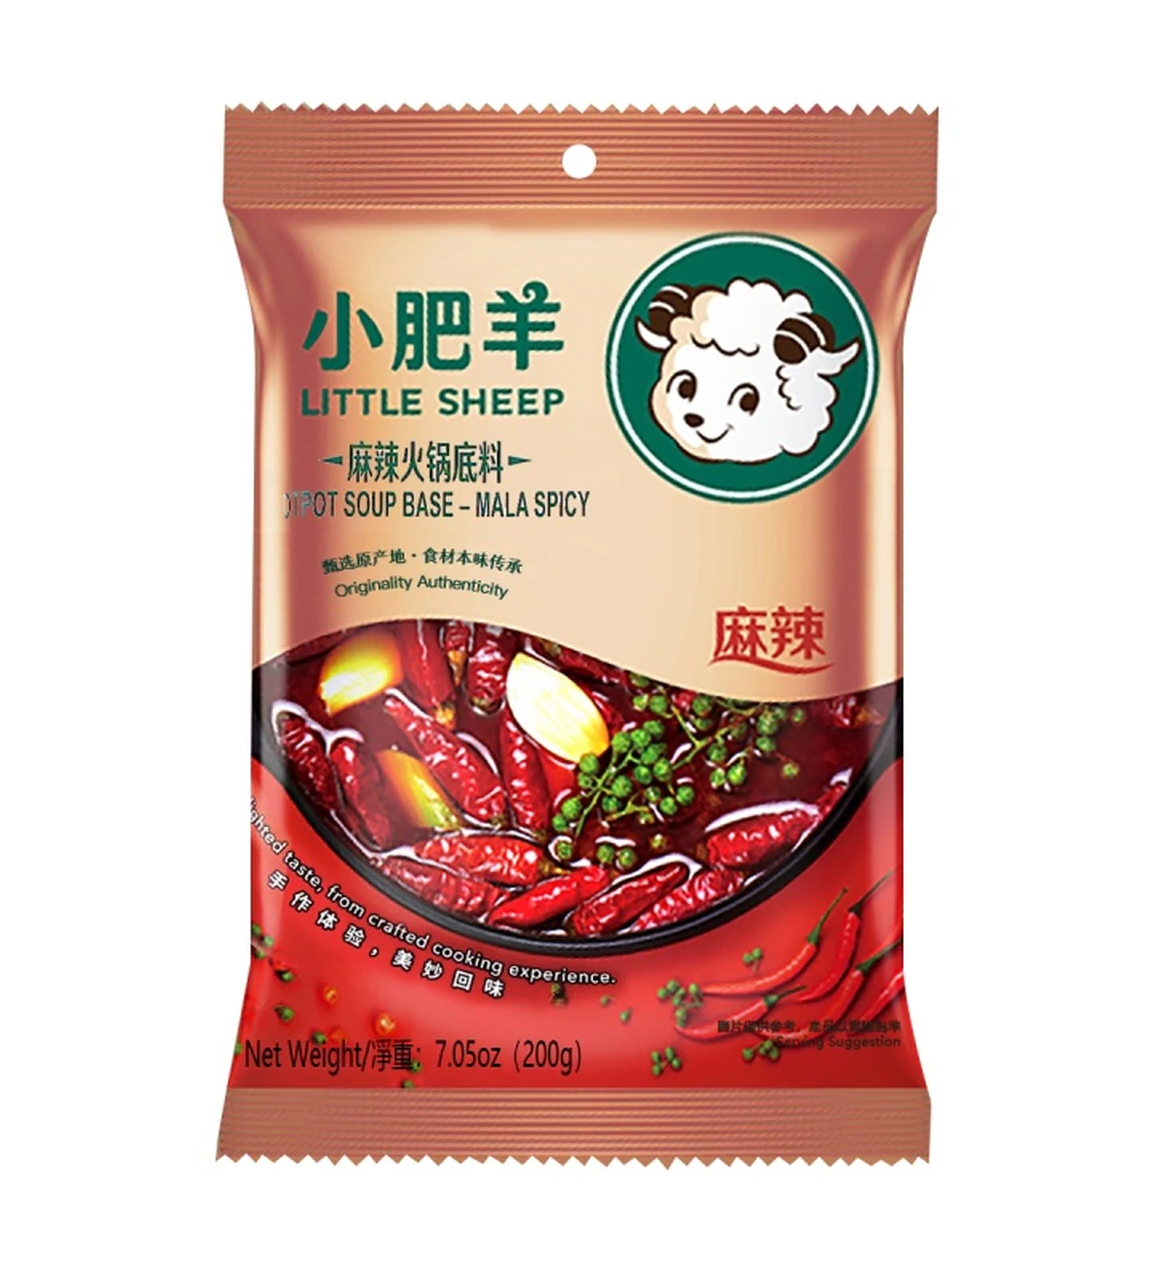 Little Sheep Hot pot soup base mala spicy  (小肥羊 火锅底料 麻辣)